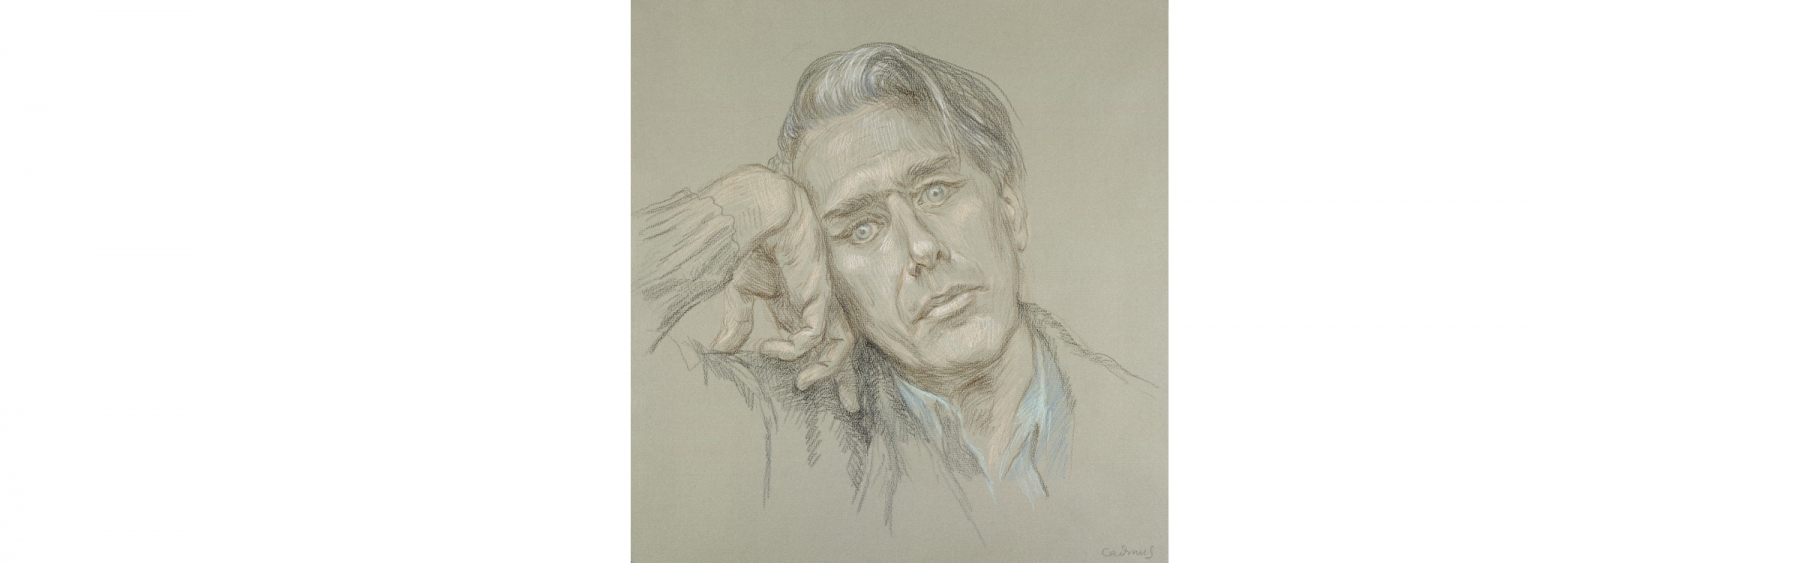 &ldquo;Self-Portrait&rdquo;, 1965. Crayon on paper. National Portrait Gallery, Smithsonian Institution.